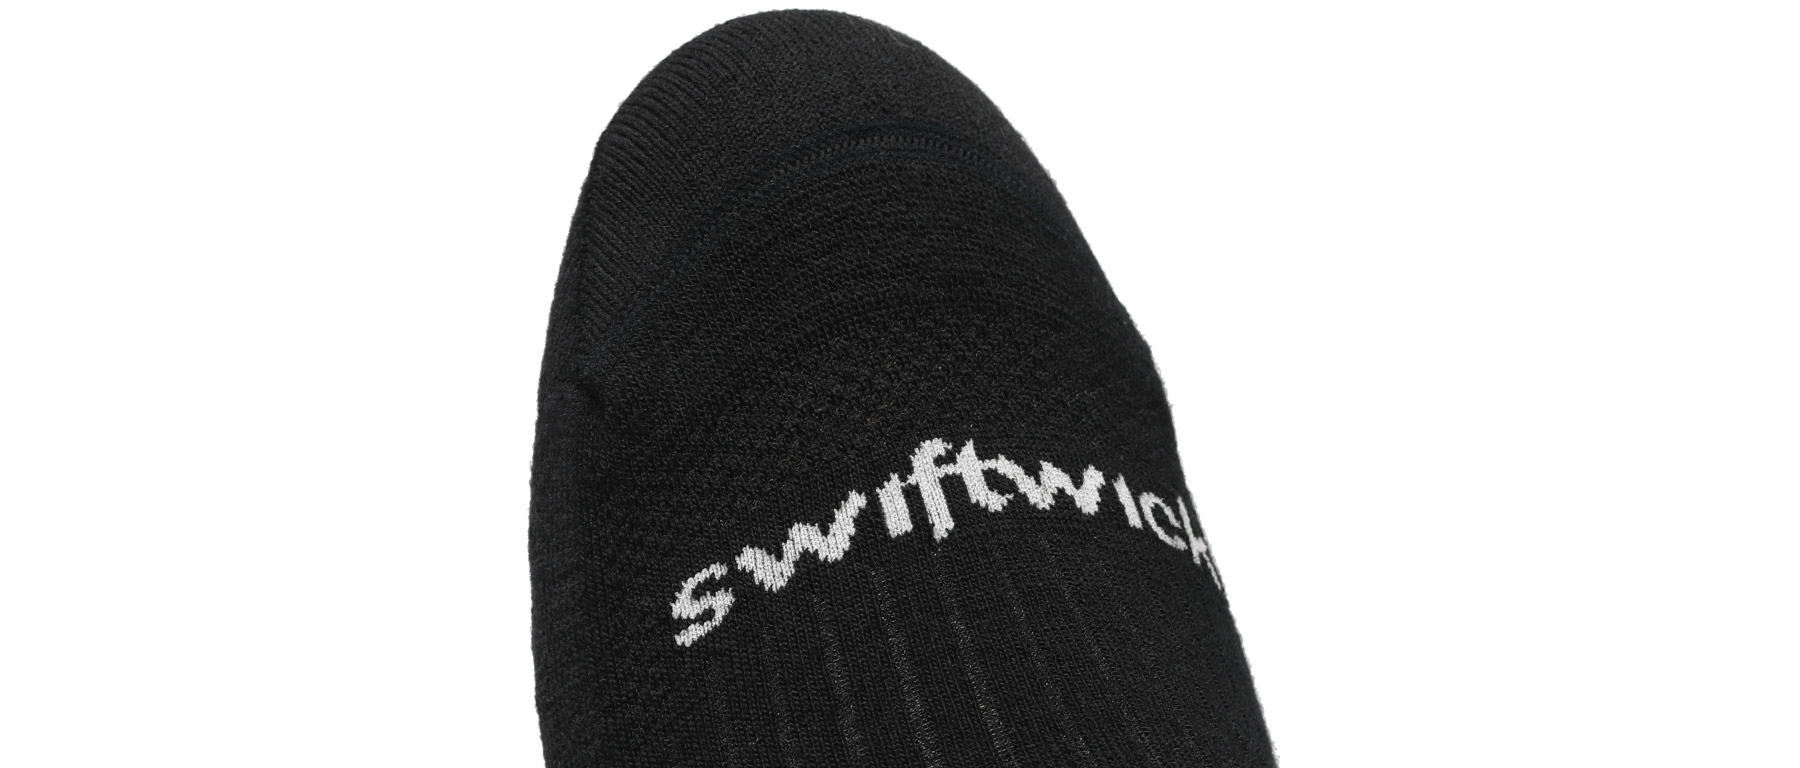 Swiftwick Pursuit Four Socks